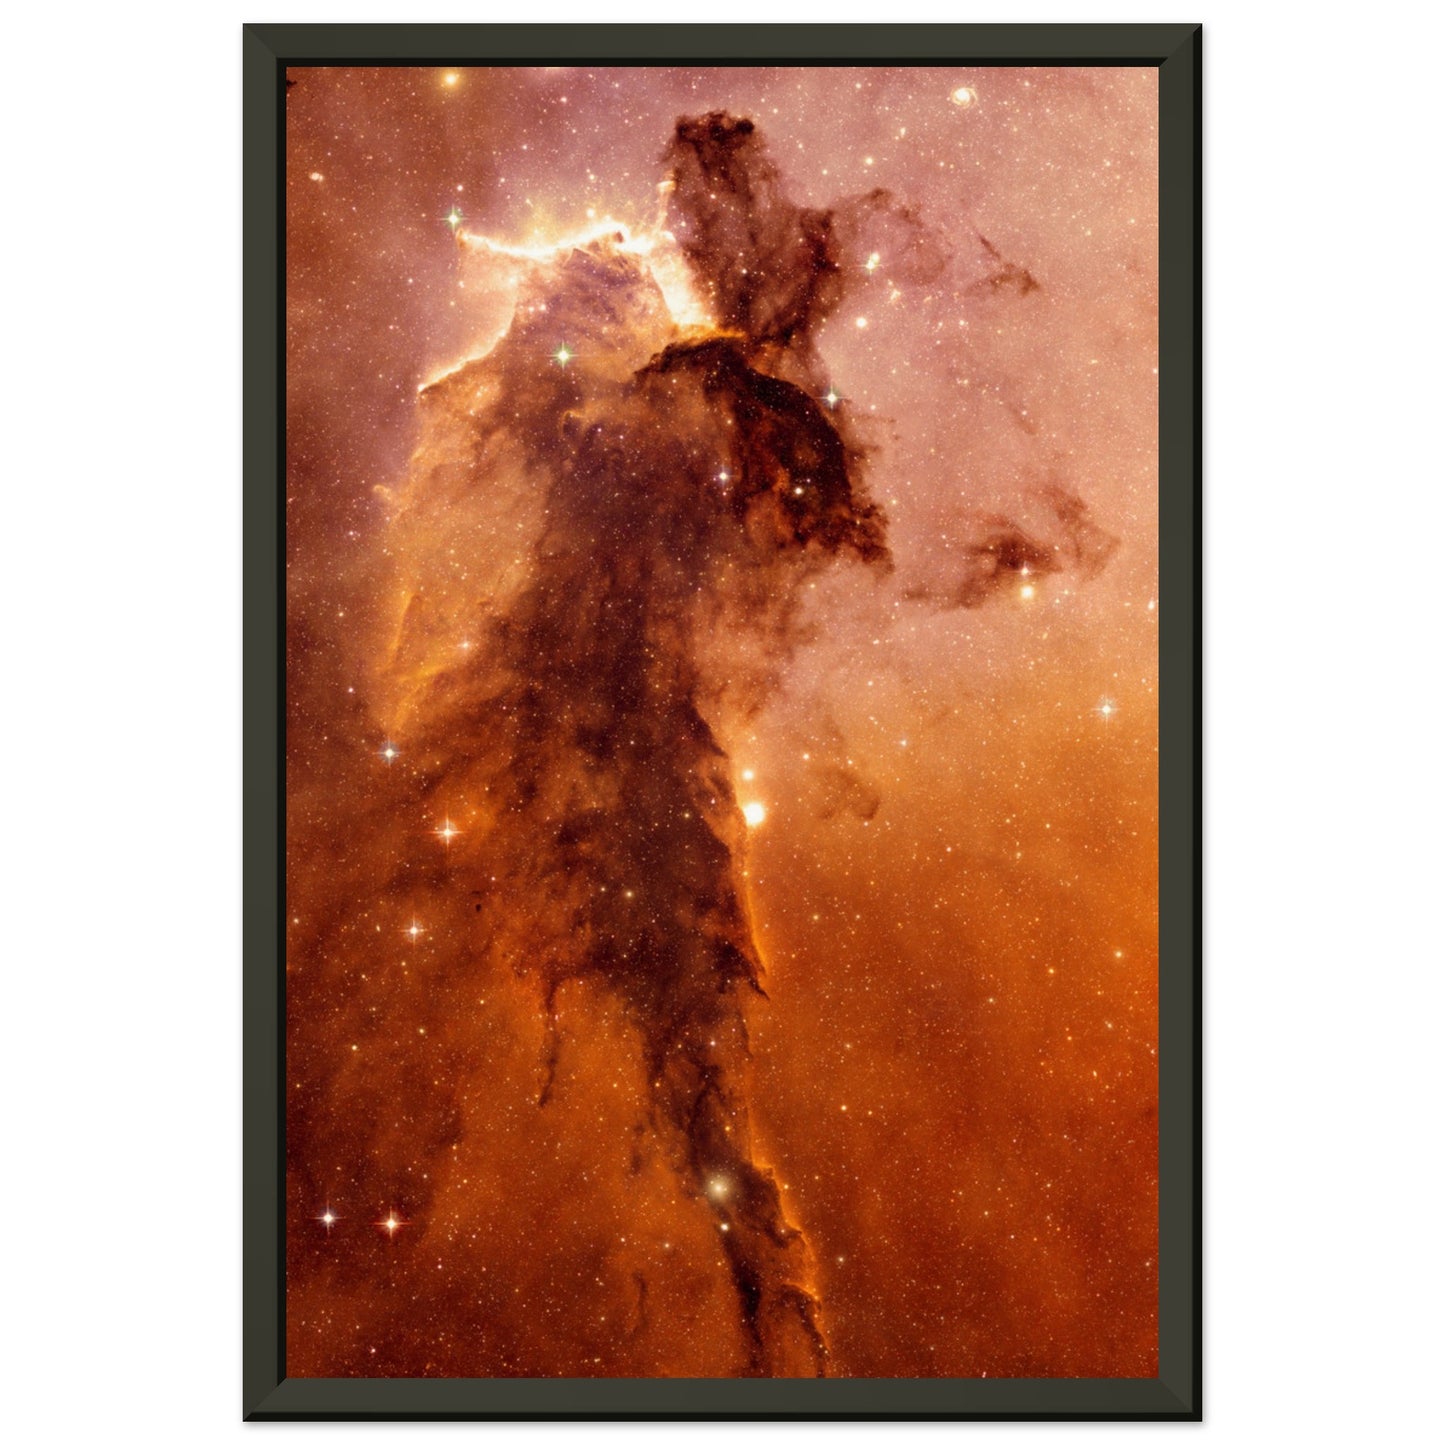 The "Black Pillar" spire within the Eagle Nebula